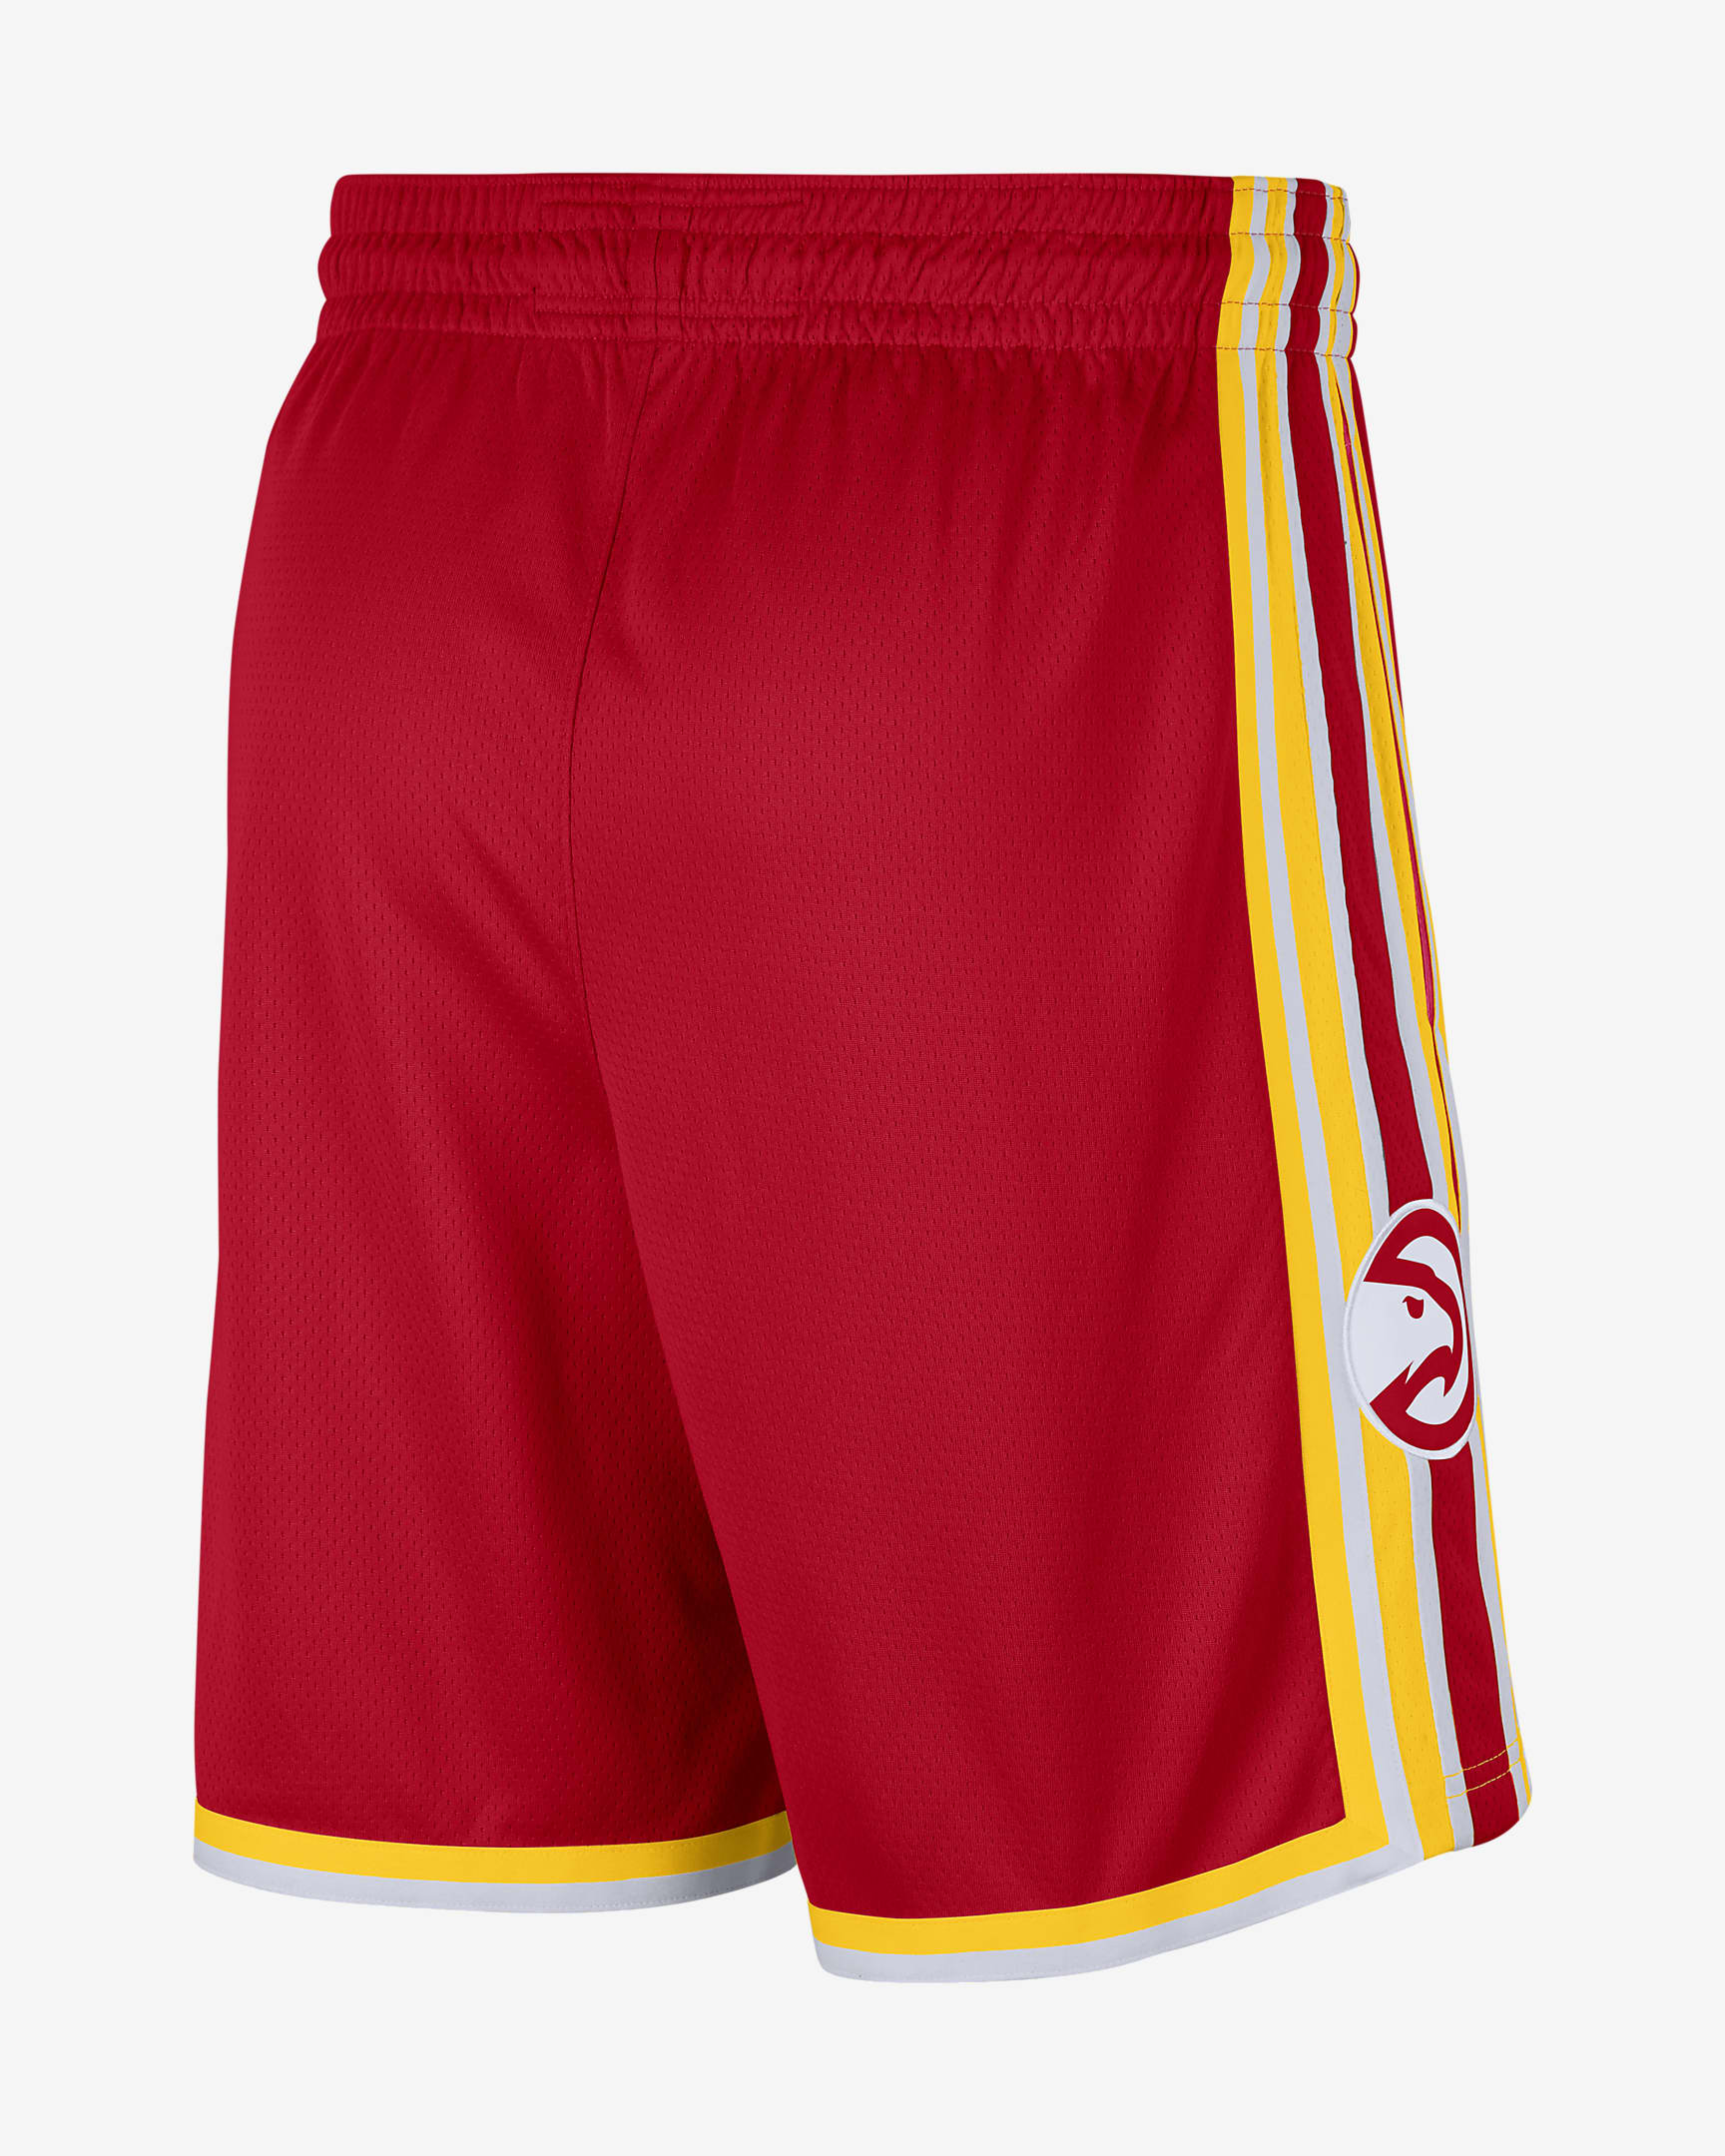 Hawks Icon Edition 2020 Men's Nike NBA Swingman Shorts. Nike AU